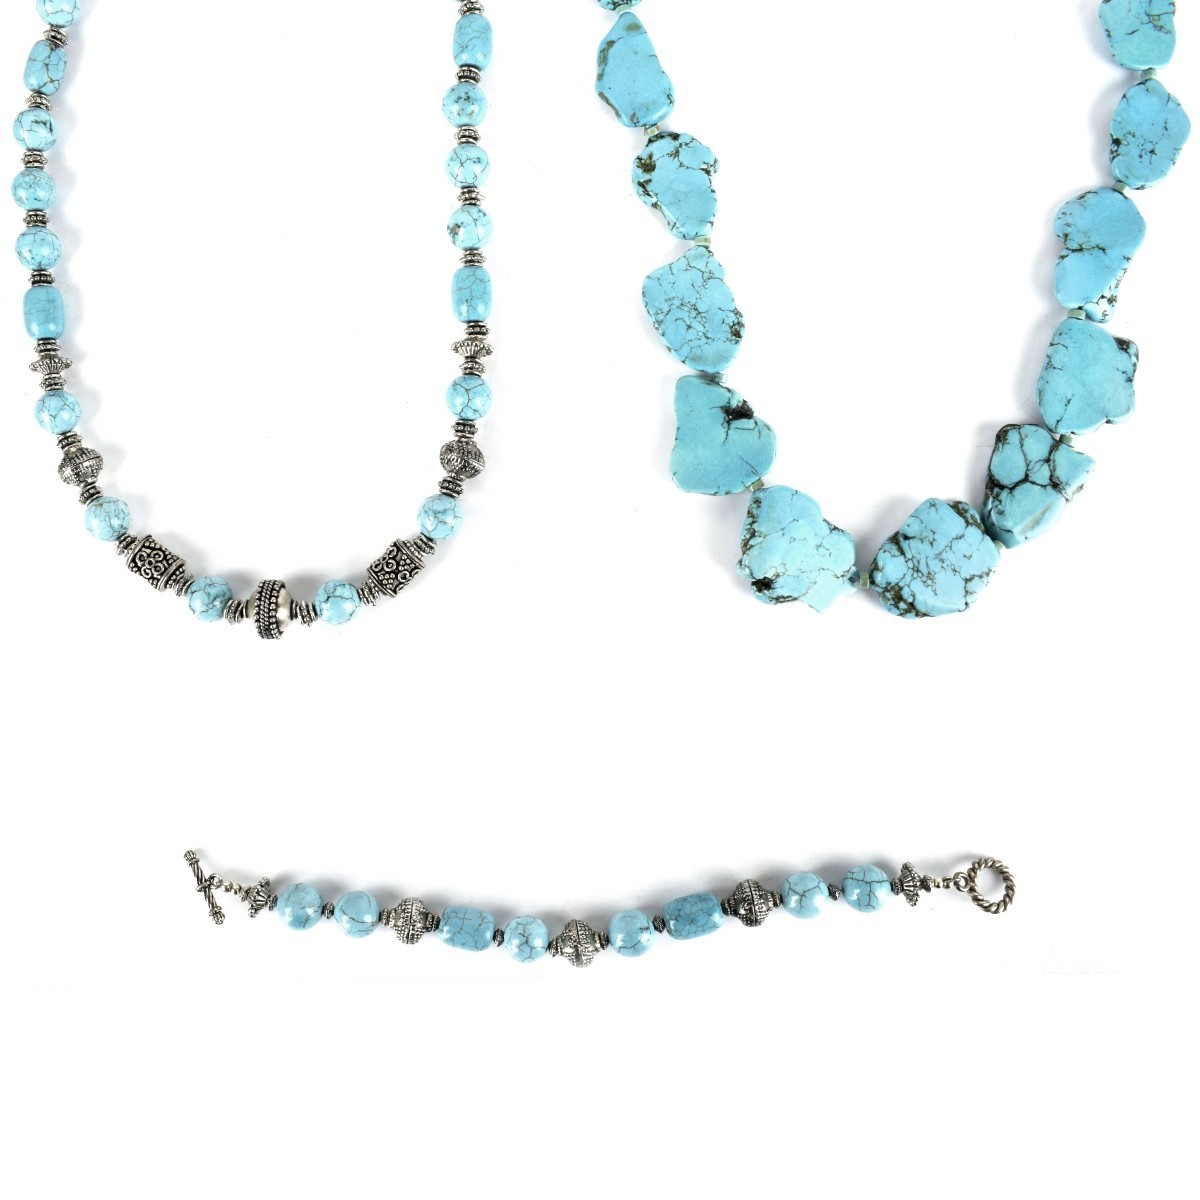 Turquoise Beaded Jewelry Items